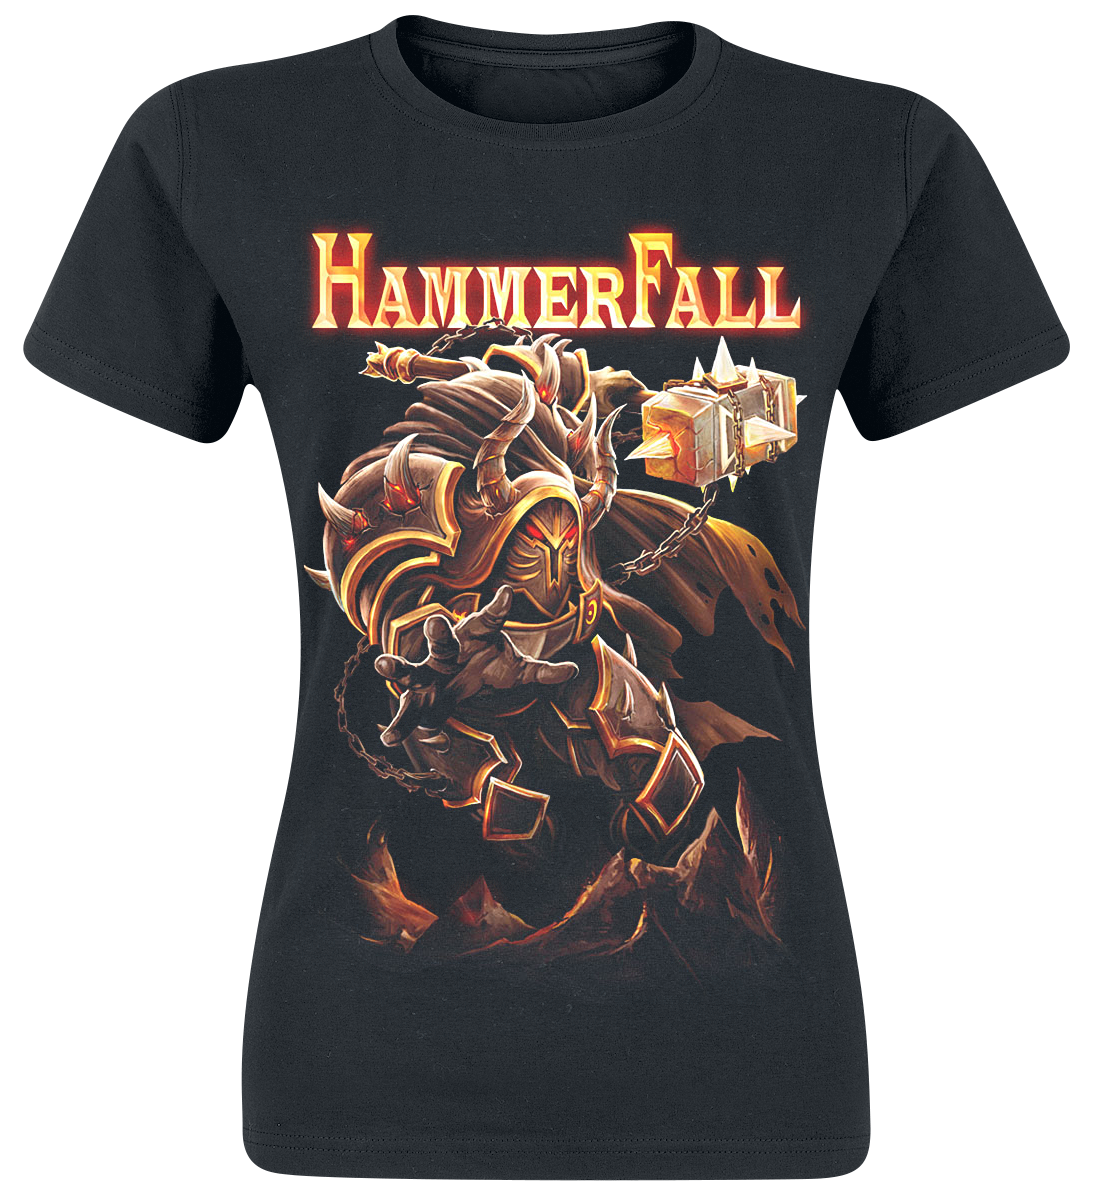 Hammerfall - One Against The World - Girls shirt - black image